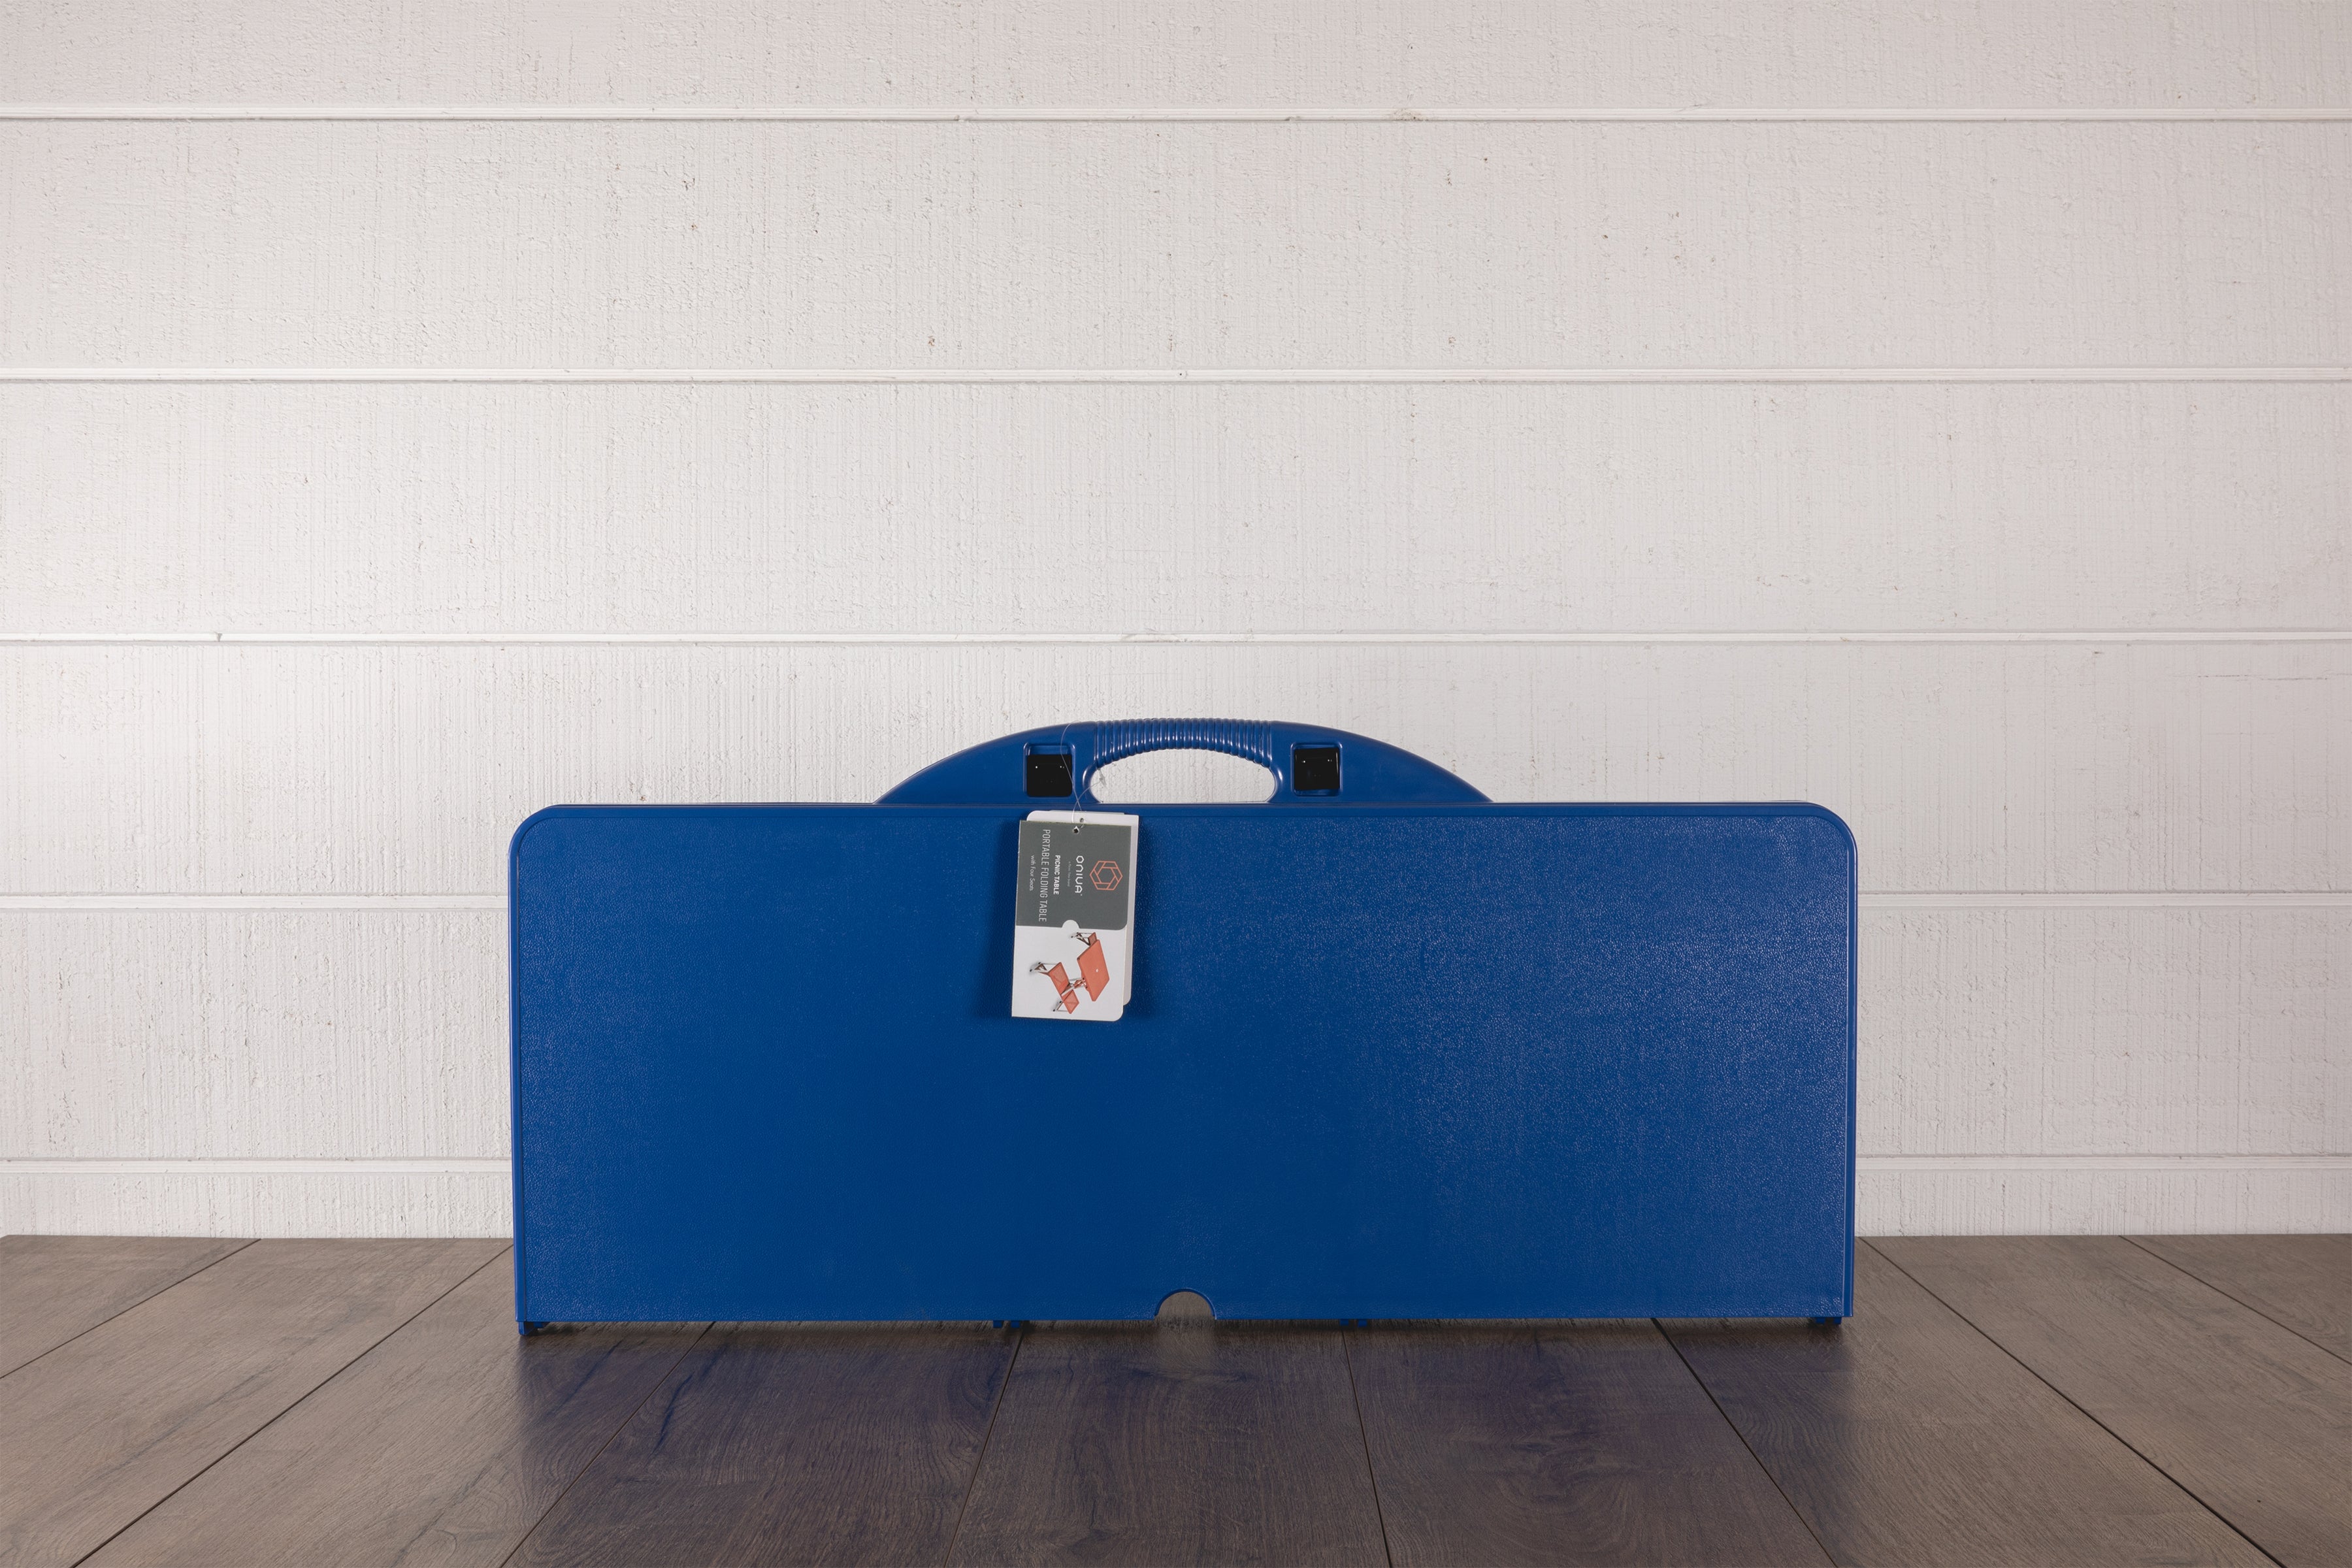 Oklahoma Sooners Football Field - Picnic Table Portable Folding Table with Seats